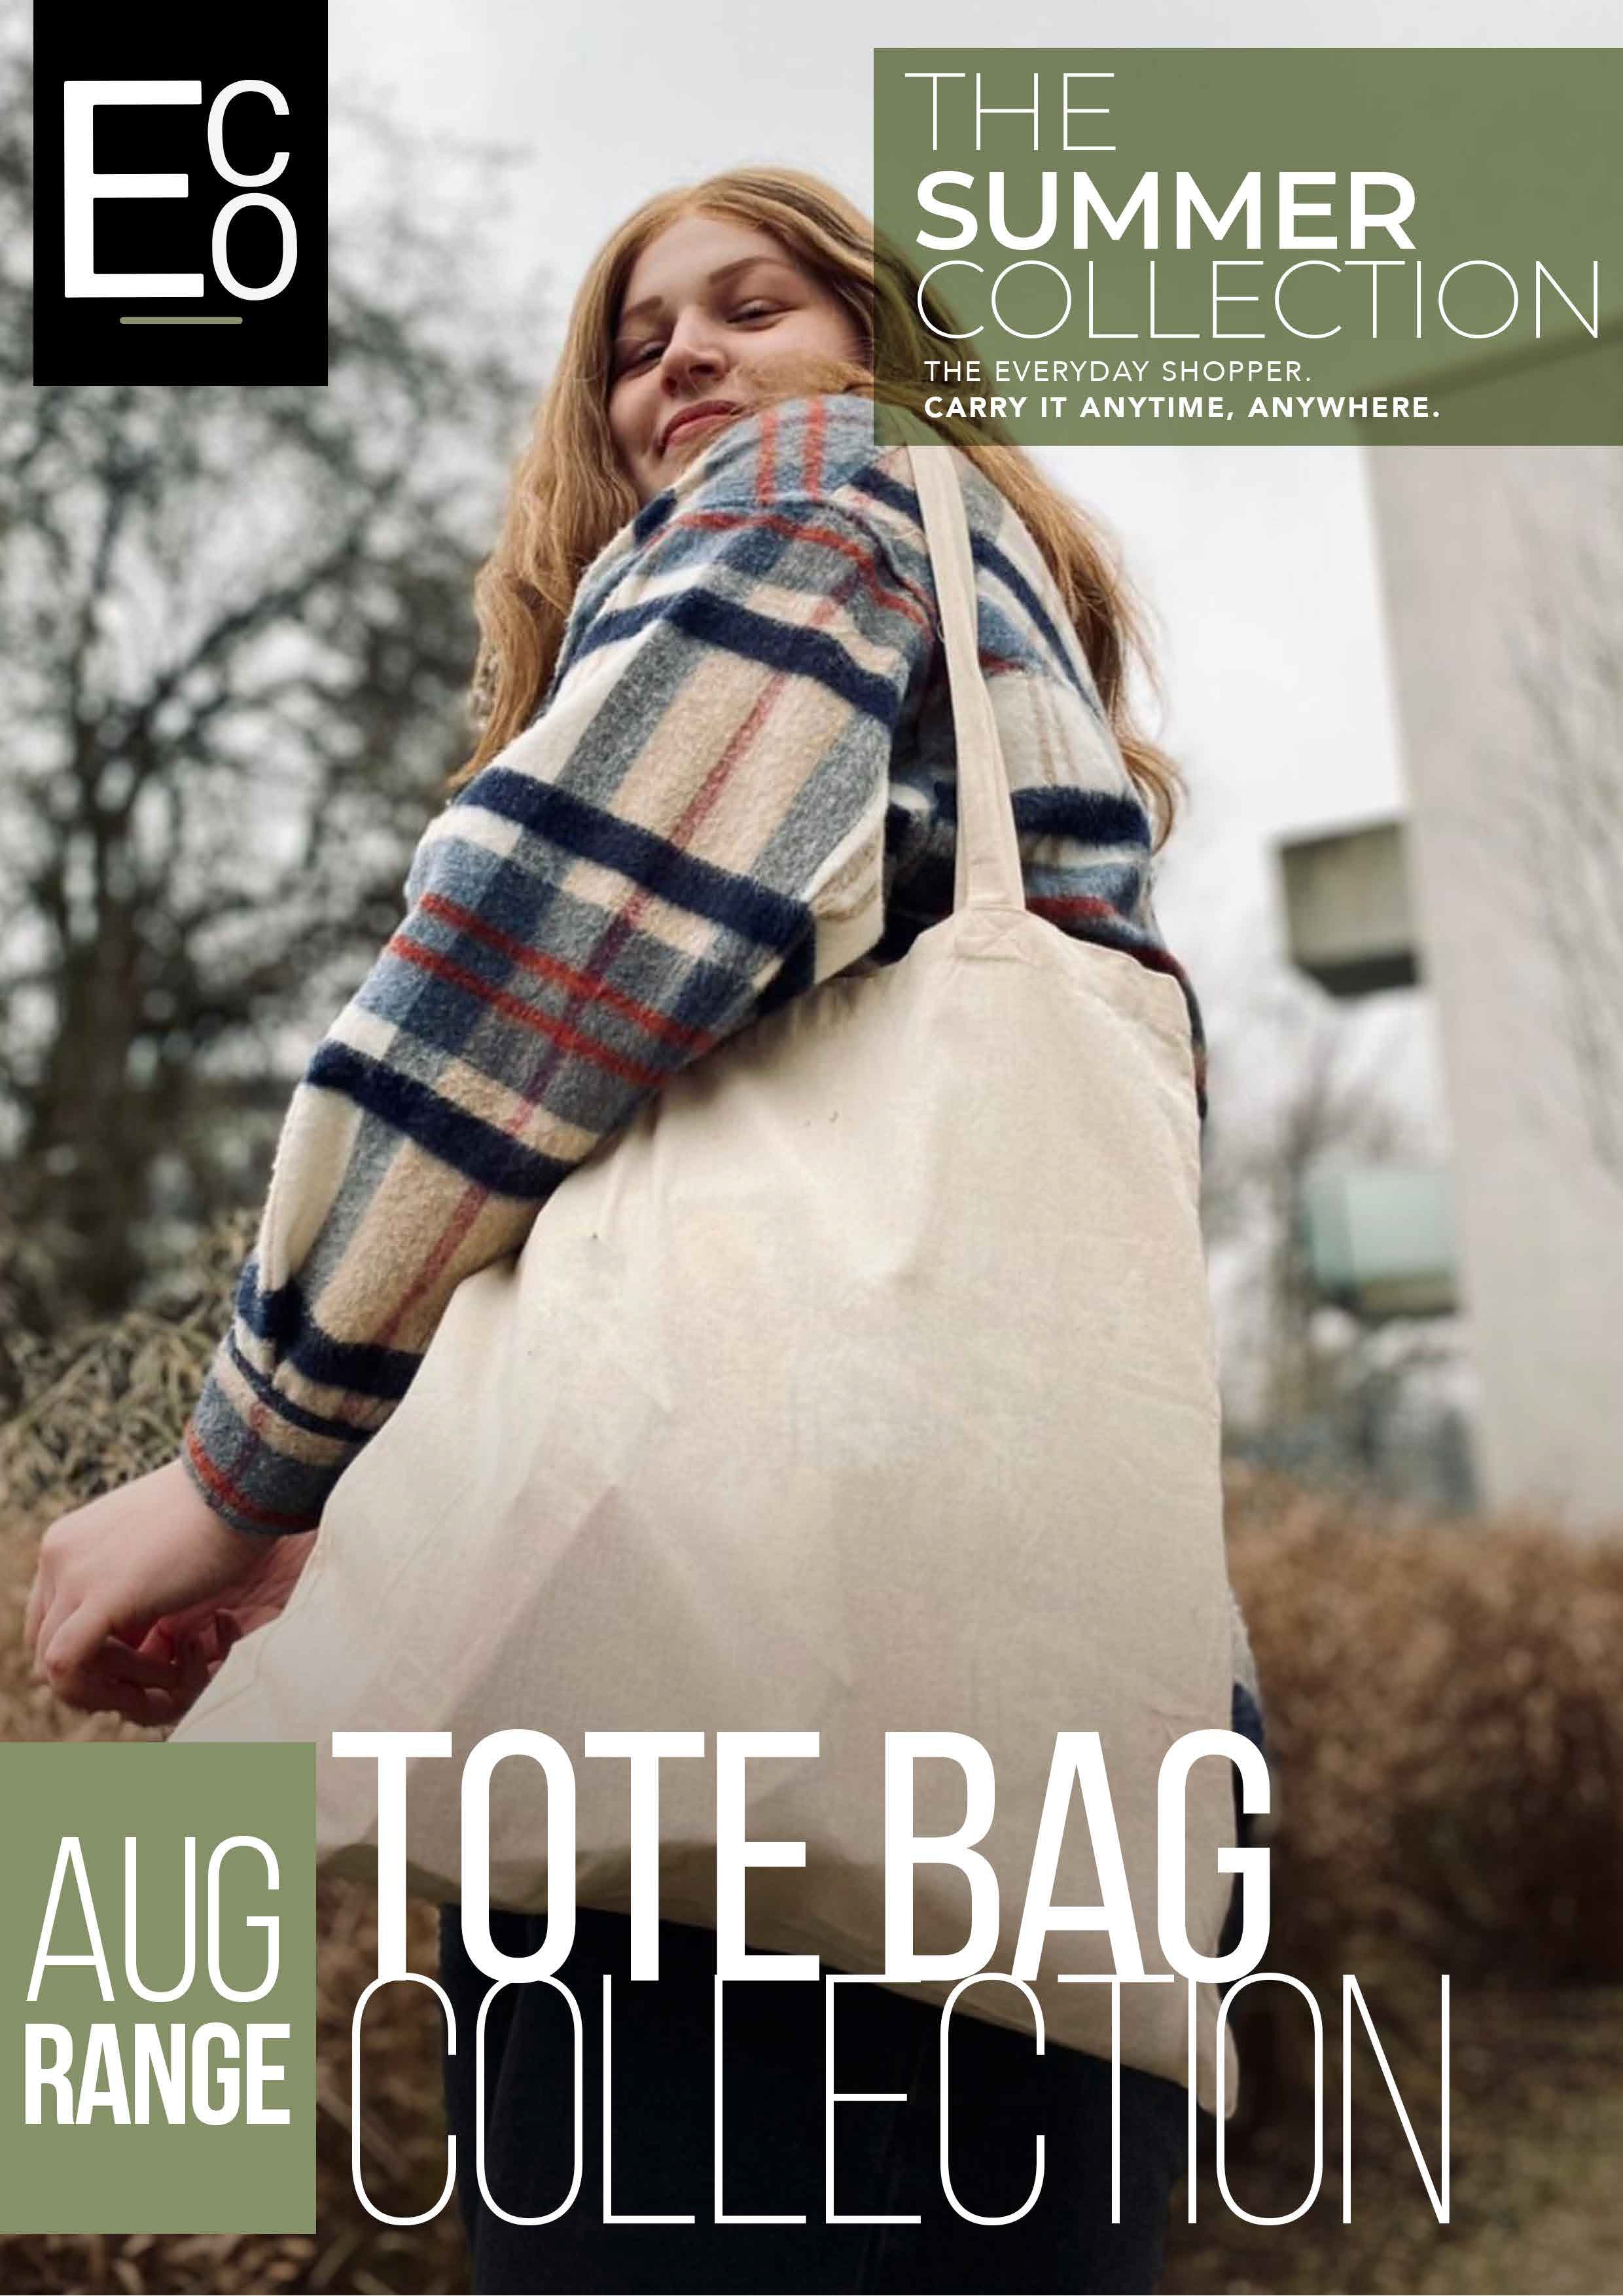 eco friendly tote bag colleection catalogue presentation